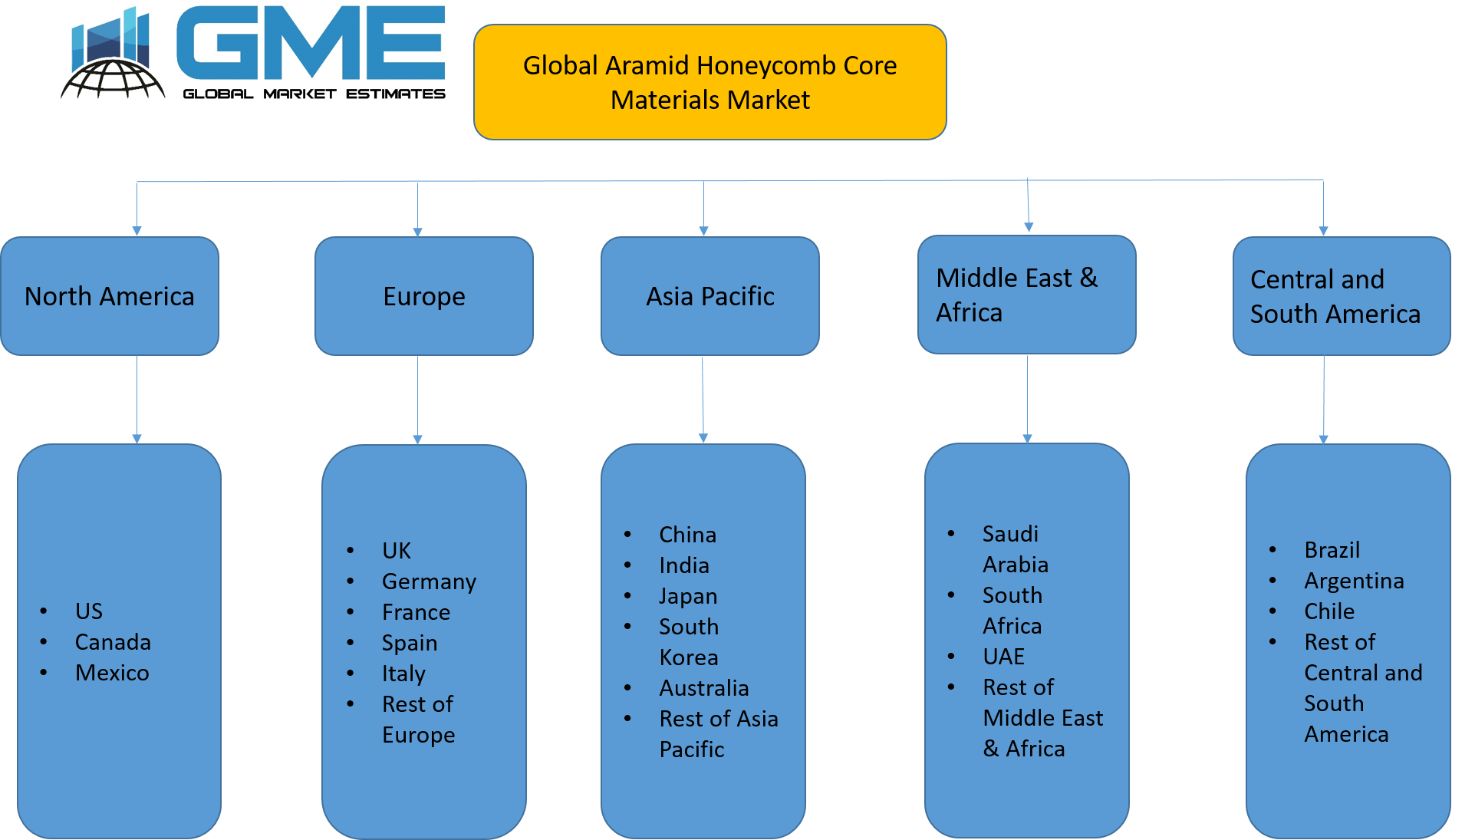 Global Aramid Honeycomb Core Materials Market - Regional Analysis